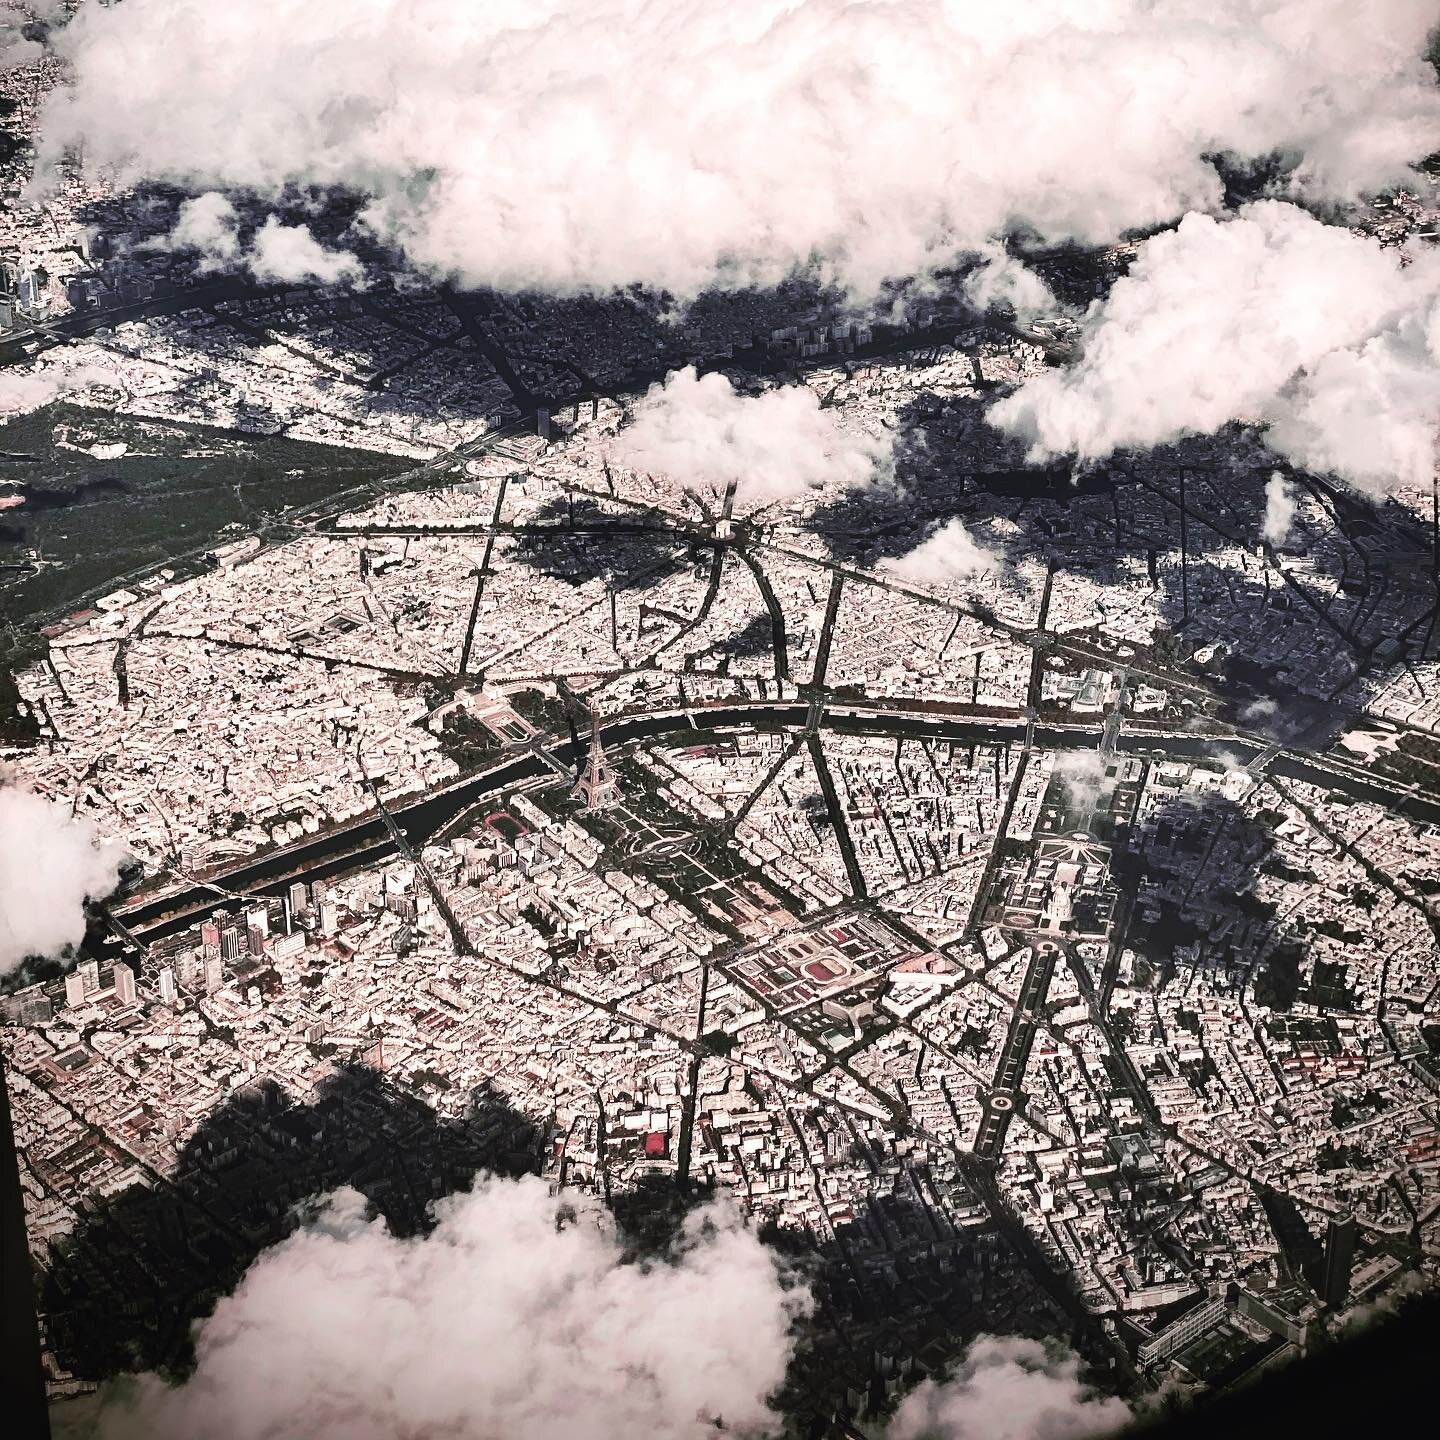 Paris from above.

#toureeiffel 
#paris 
#gp5adventure